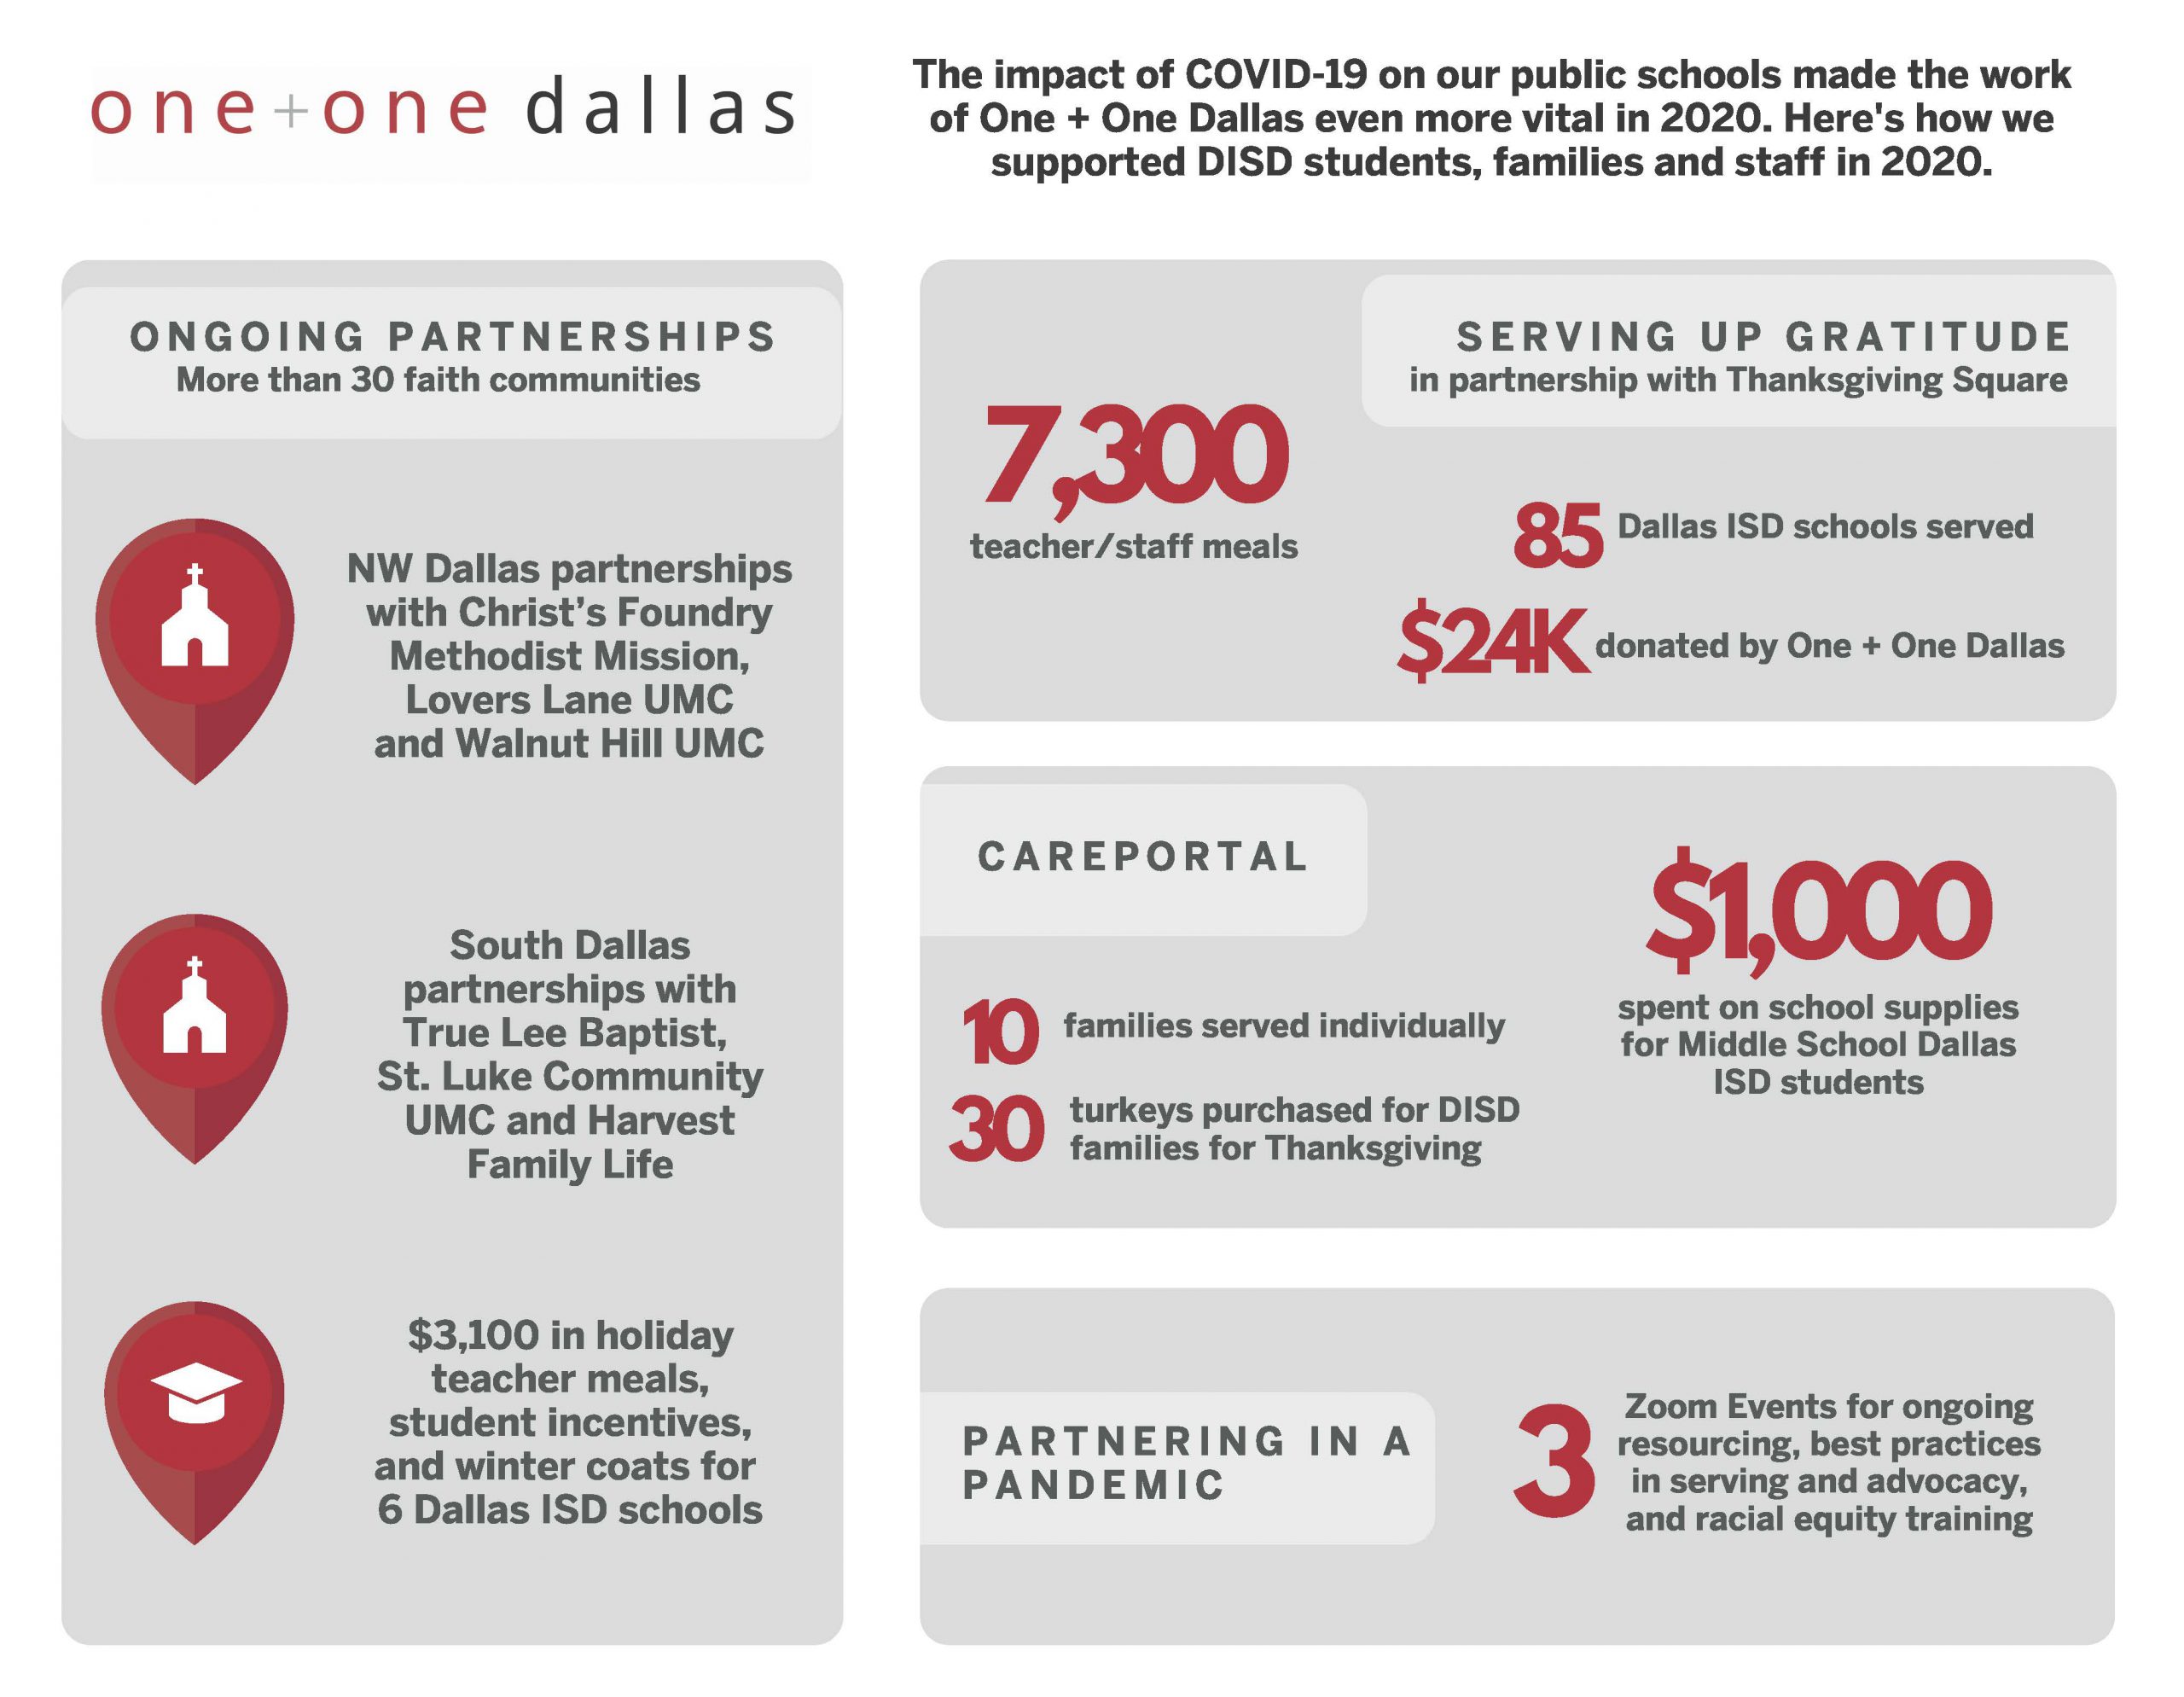 One+One Dallas serves up gratitude to Dallas ISD teachers